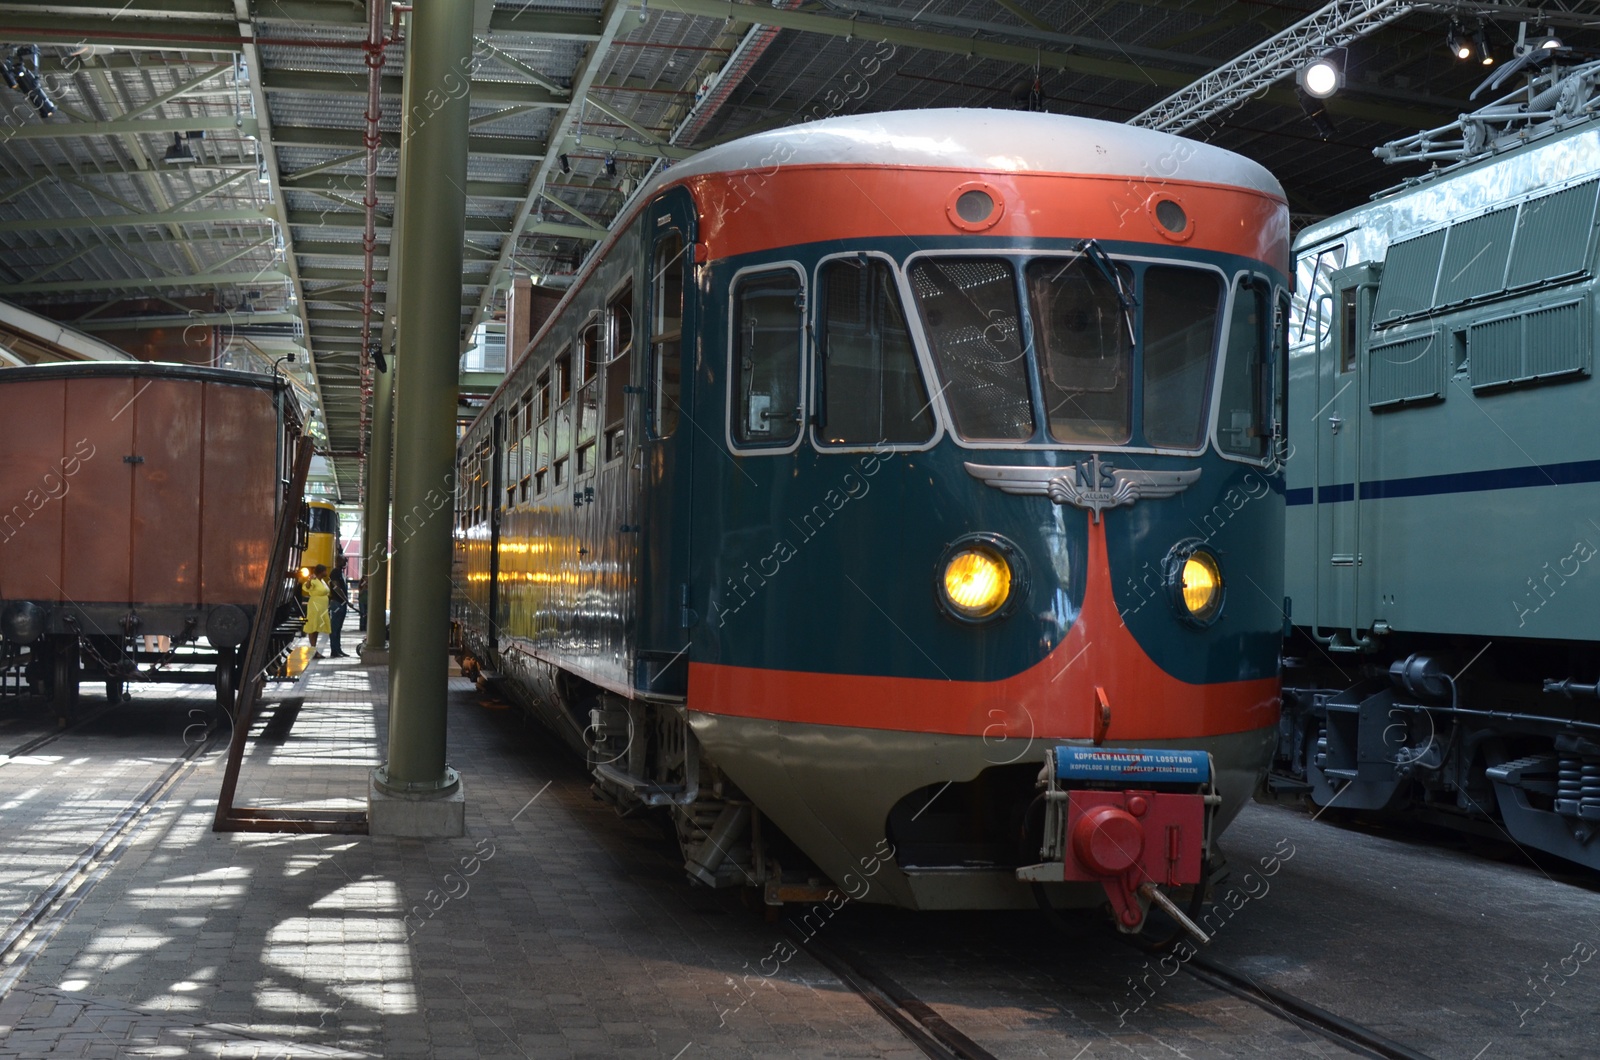 Photo of Utrecht, Netherlands - July 23, 2022: Old diesel train on display in Spoorwegmuseum